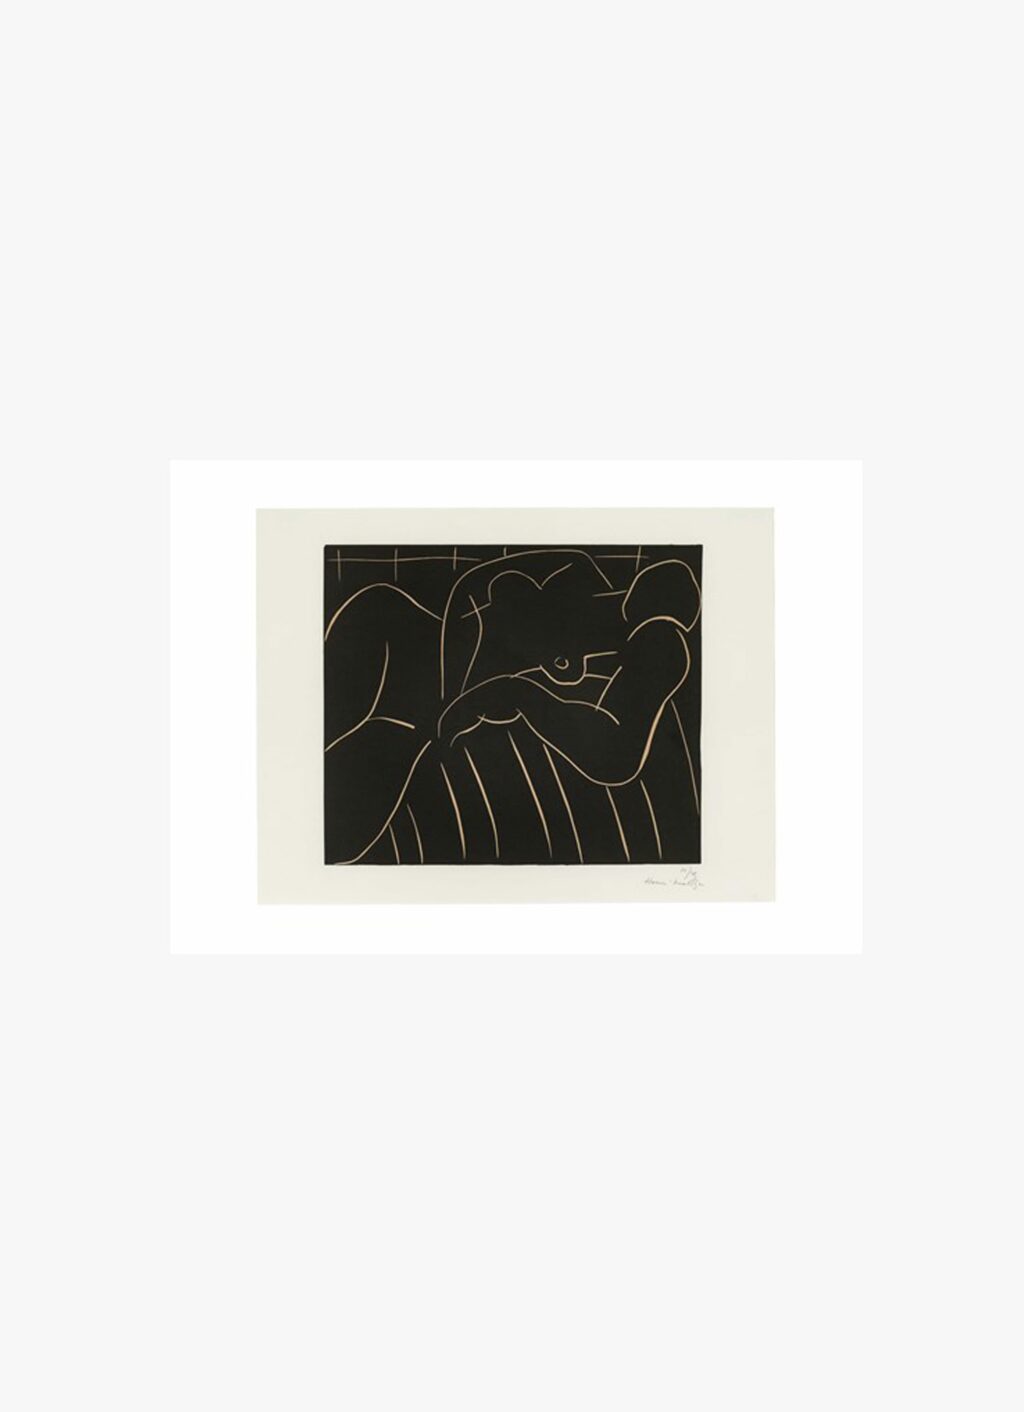 Matisse - Art Print - La Sieste - 70x50cm